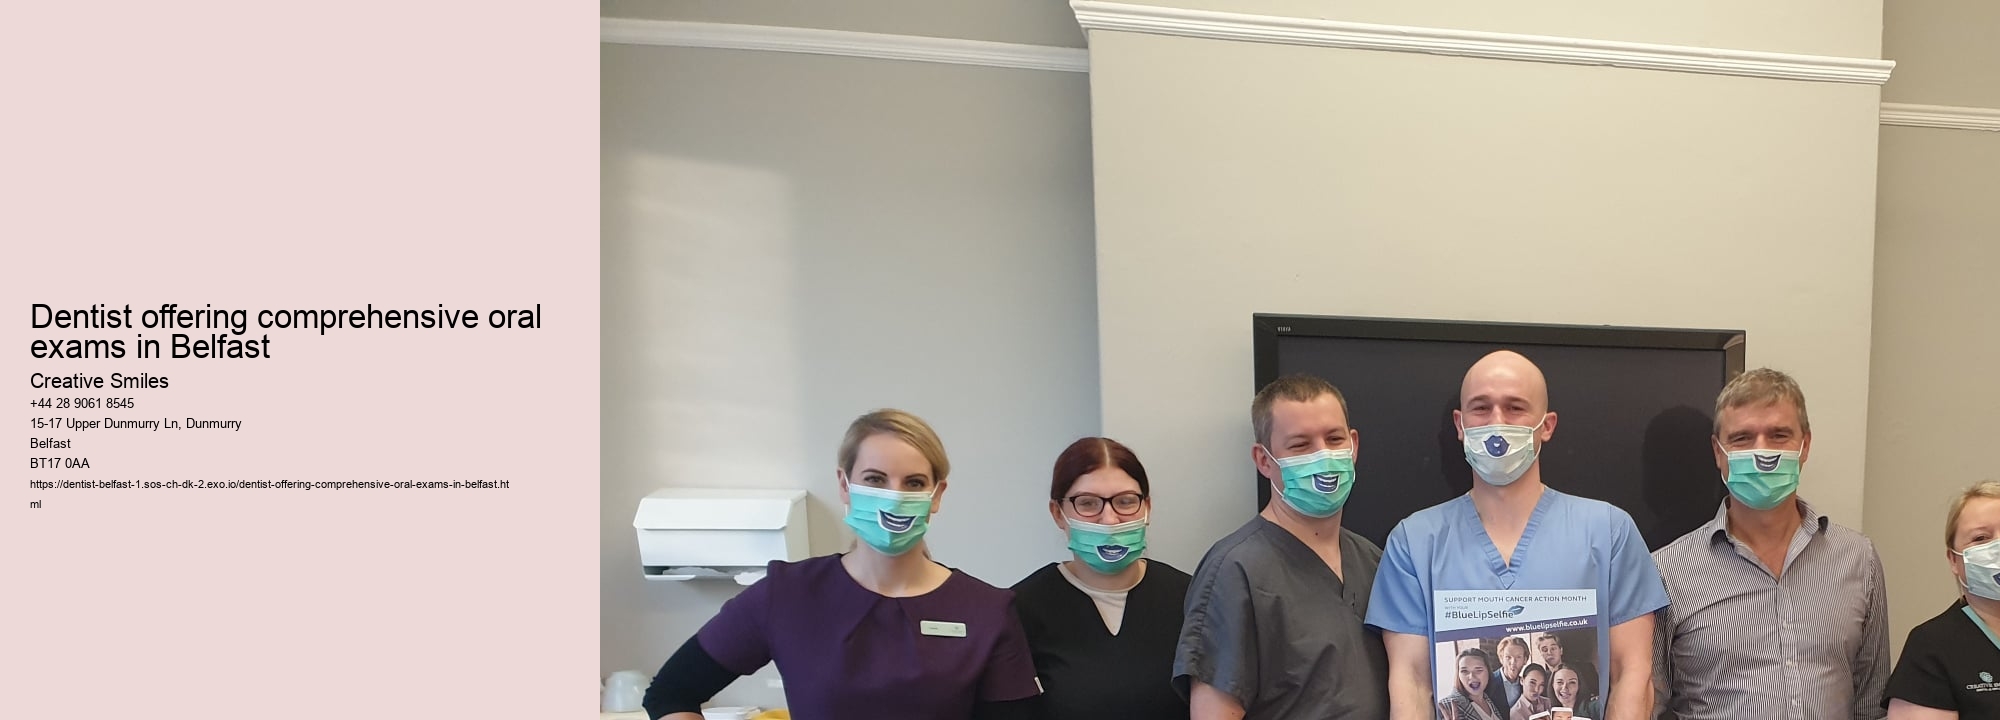 Dentist offering comprehensive oral exams in Belfast